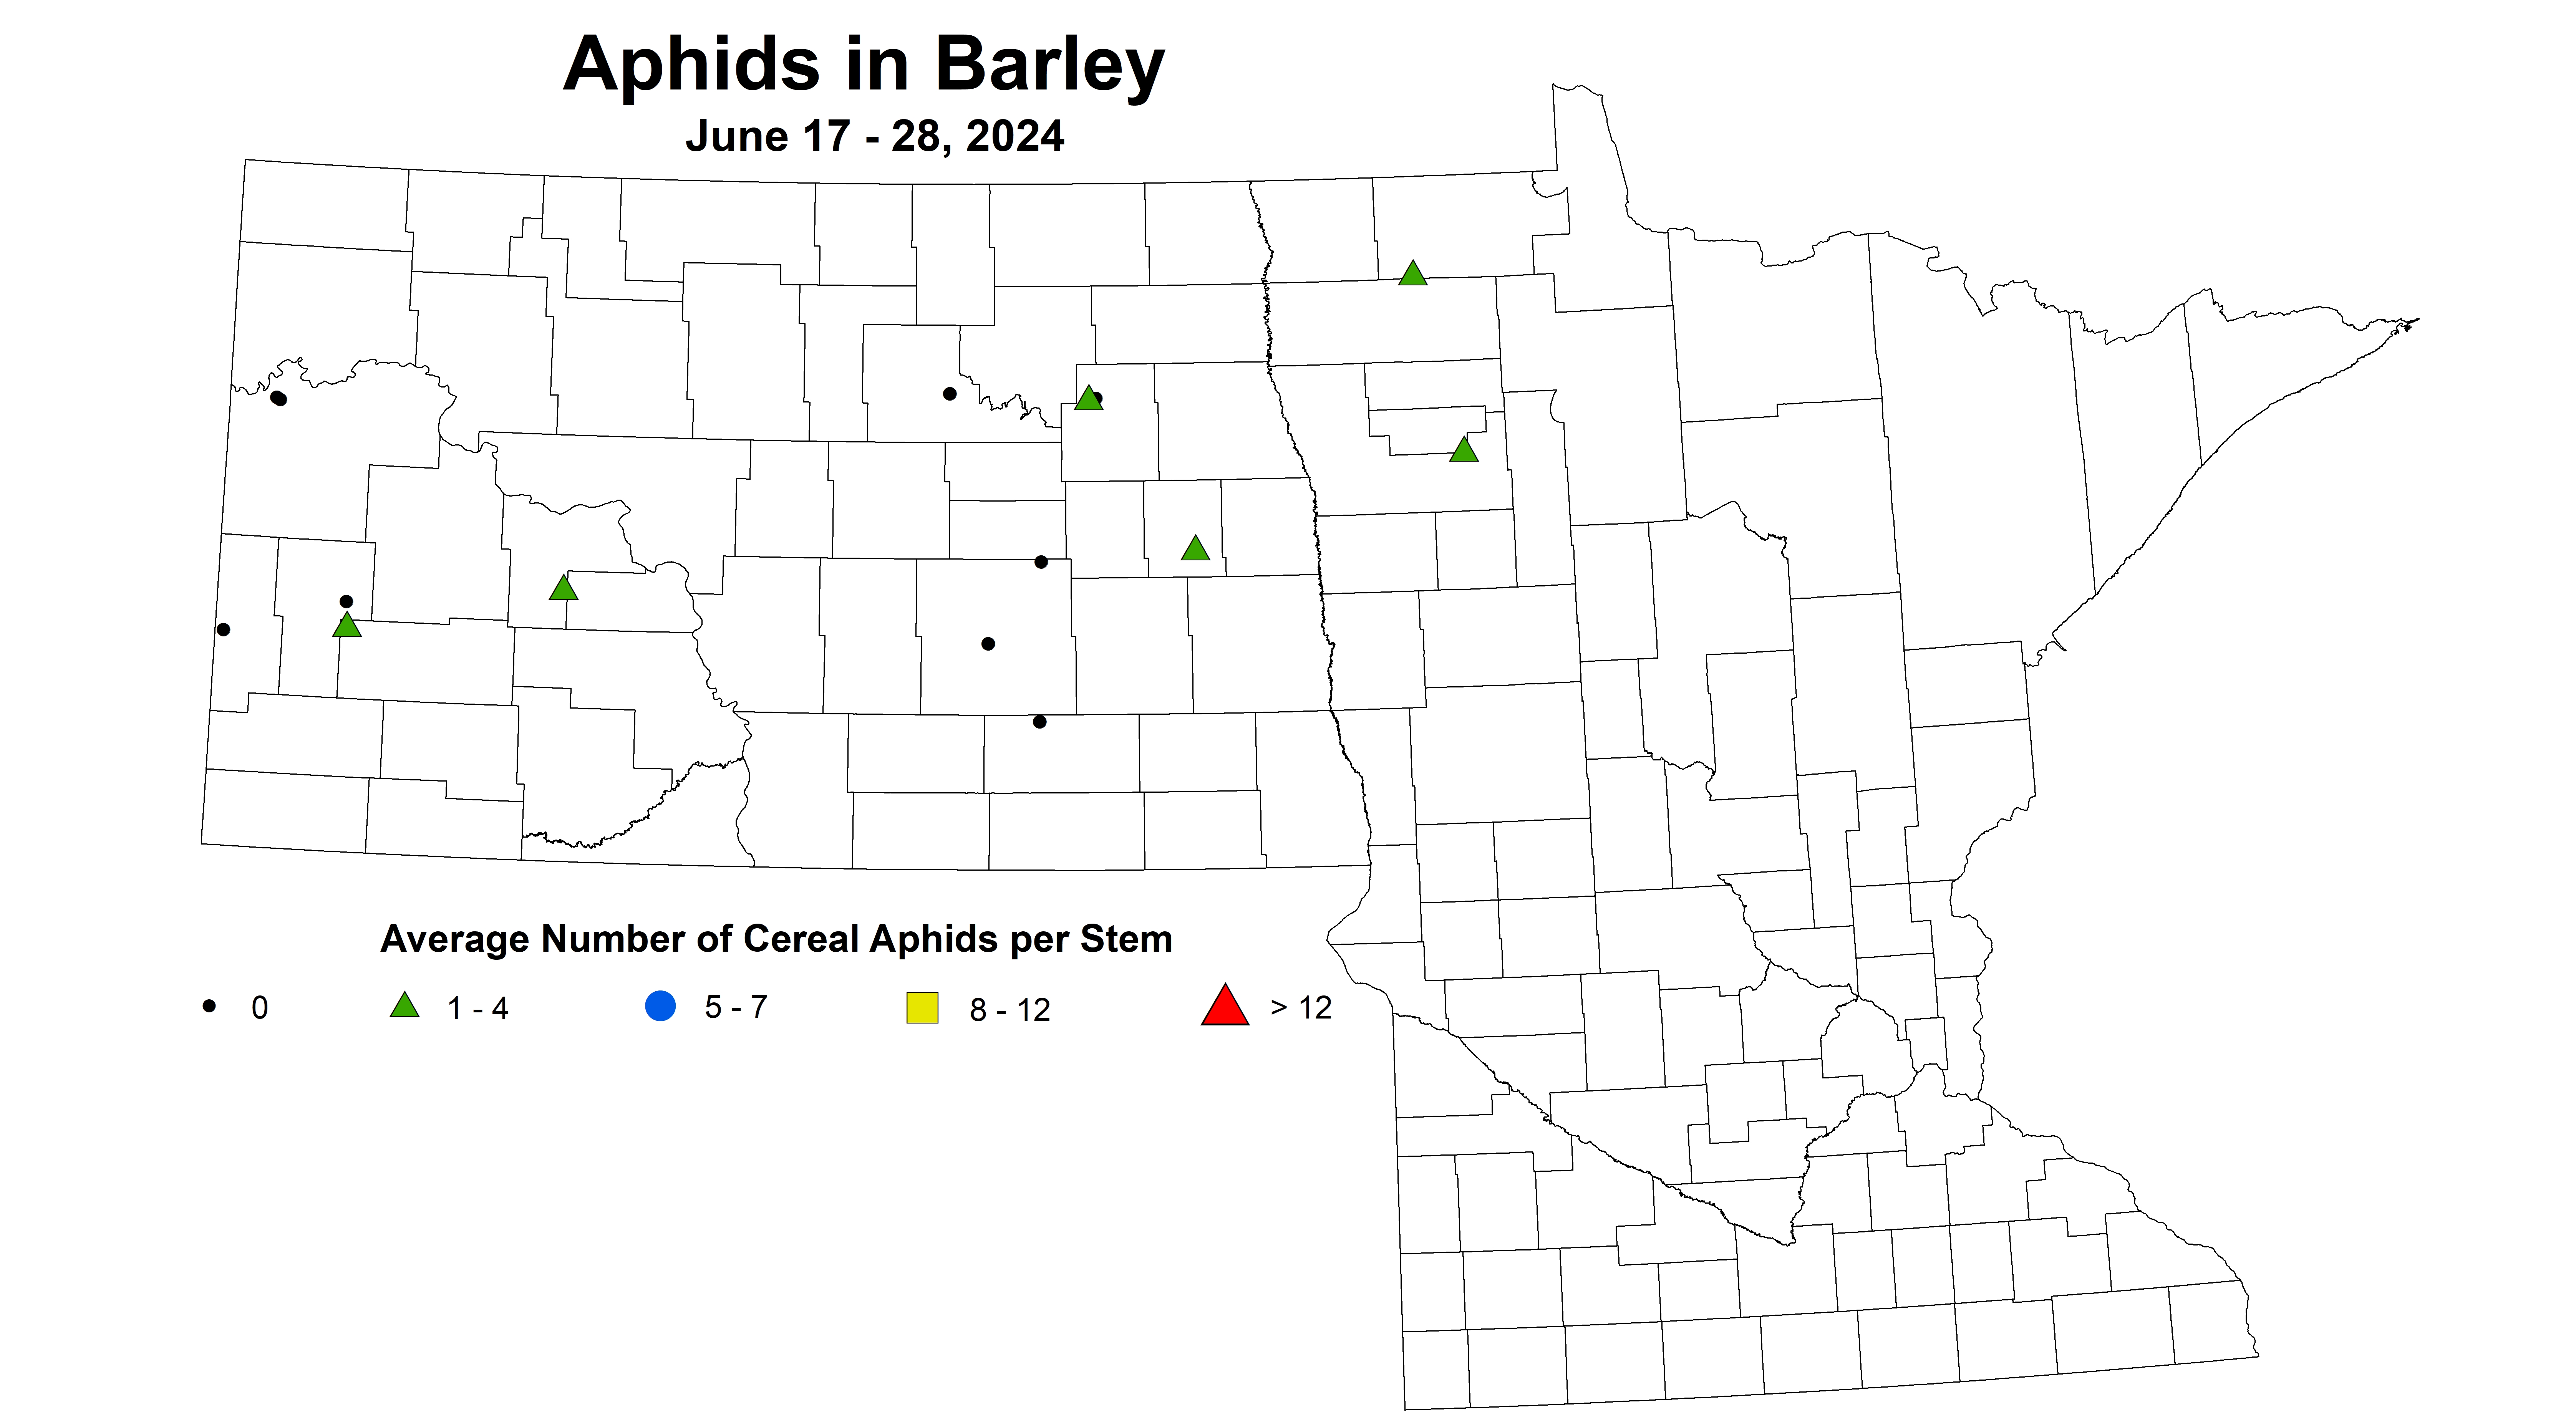 barley aphids June 17-28 2024